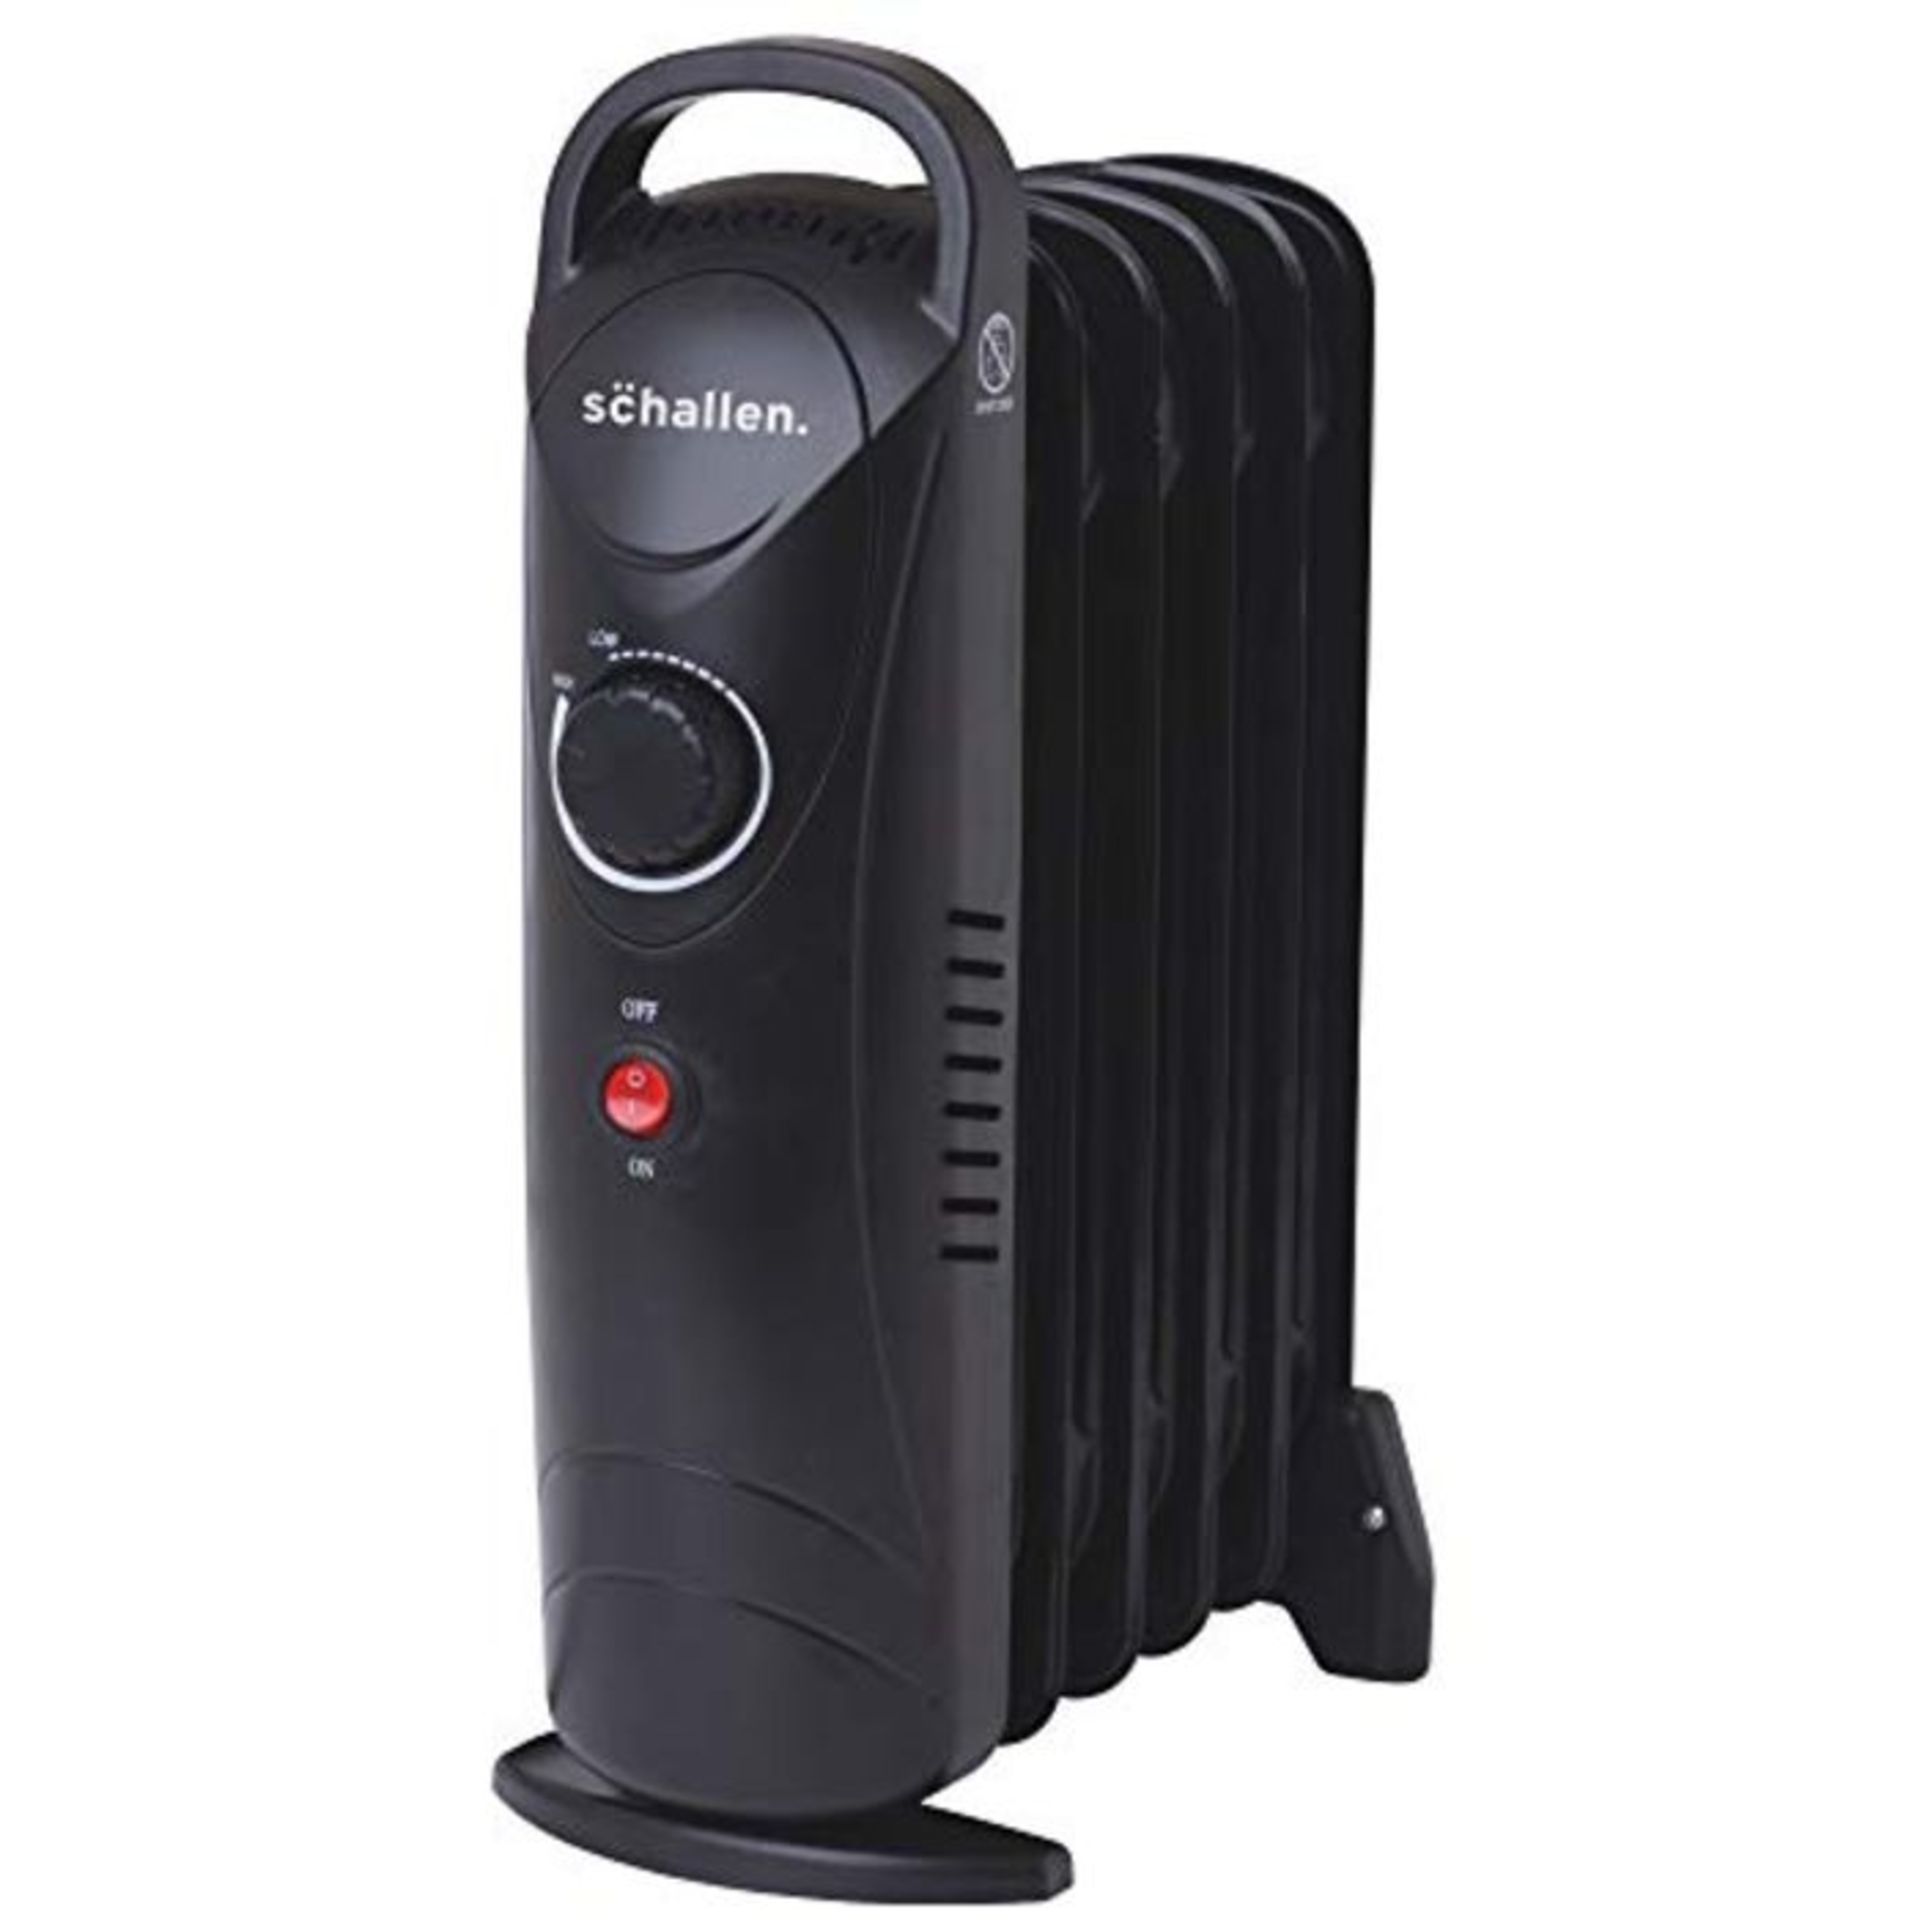 Schallen Black Portable Electric Slim Oil Filled Radiator Heater with Adjustable Tempe